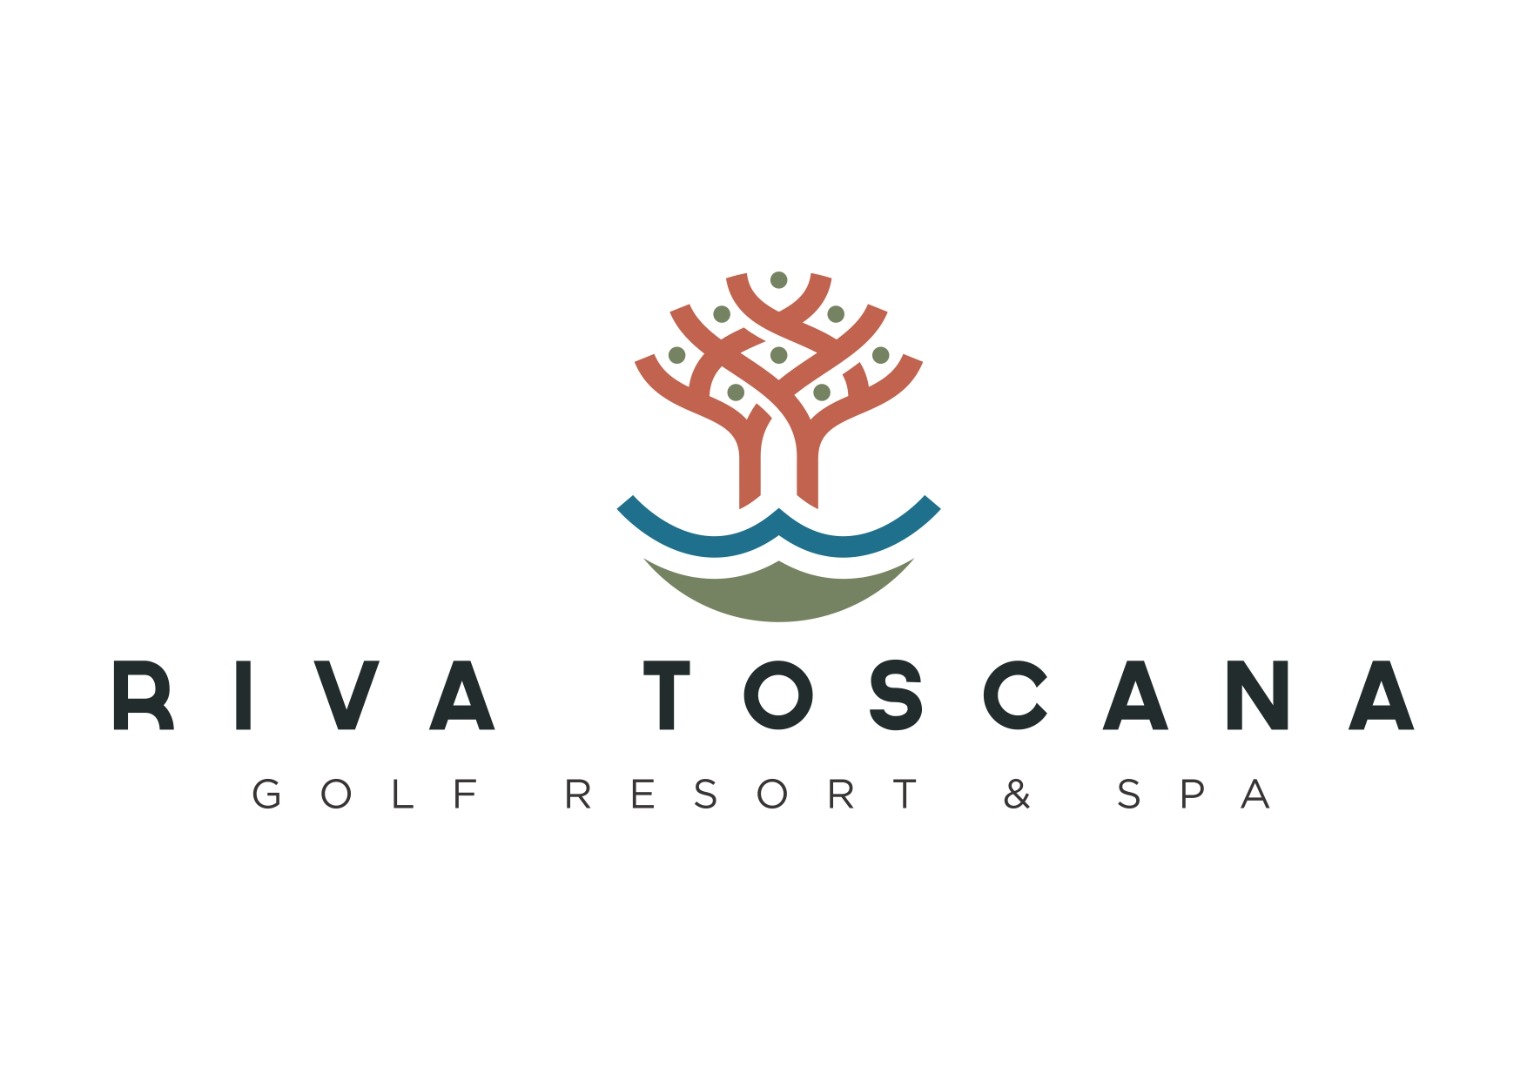 Golf Resort & SPA Riva Toscana